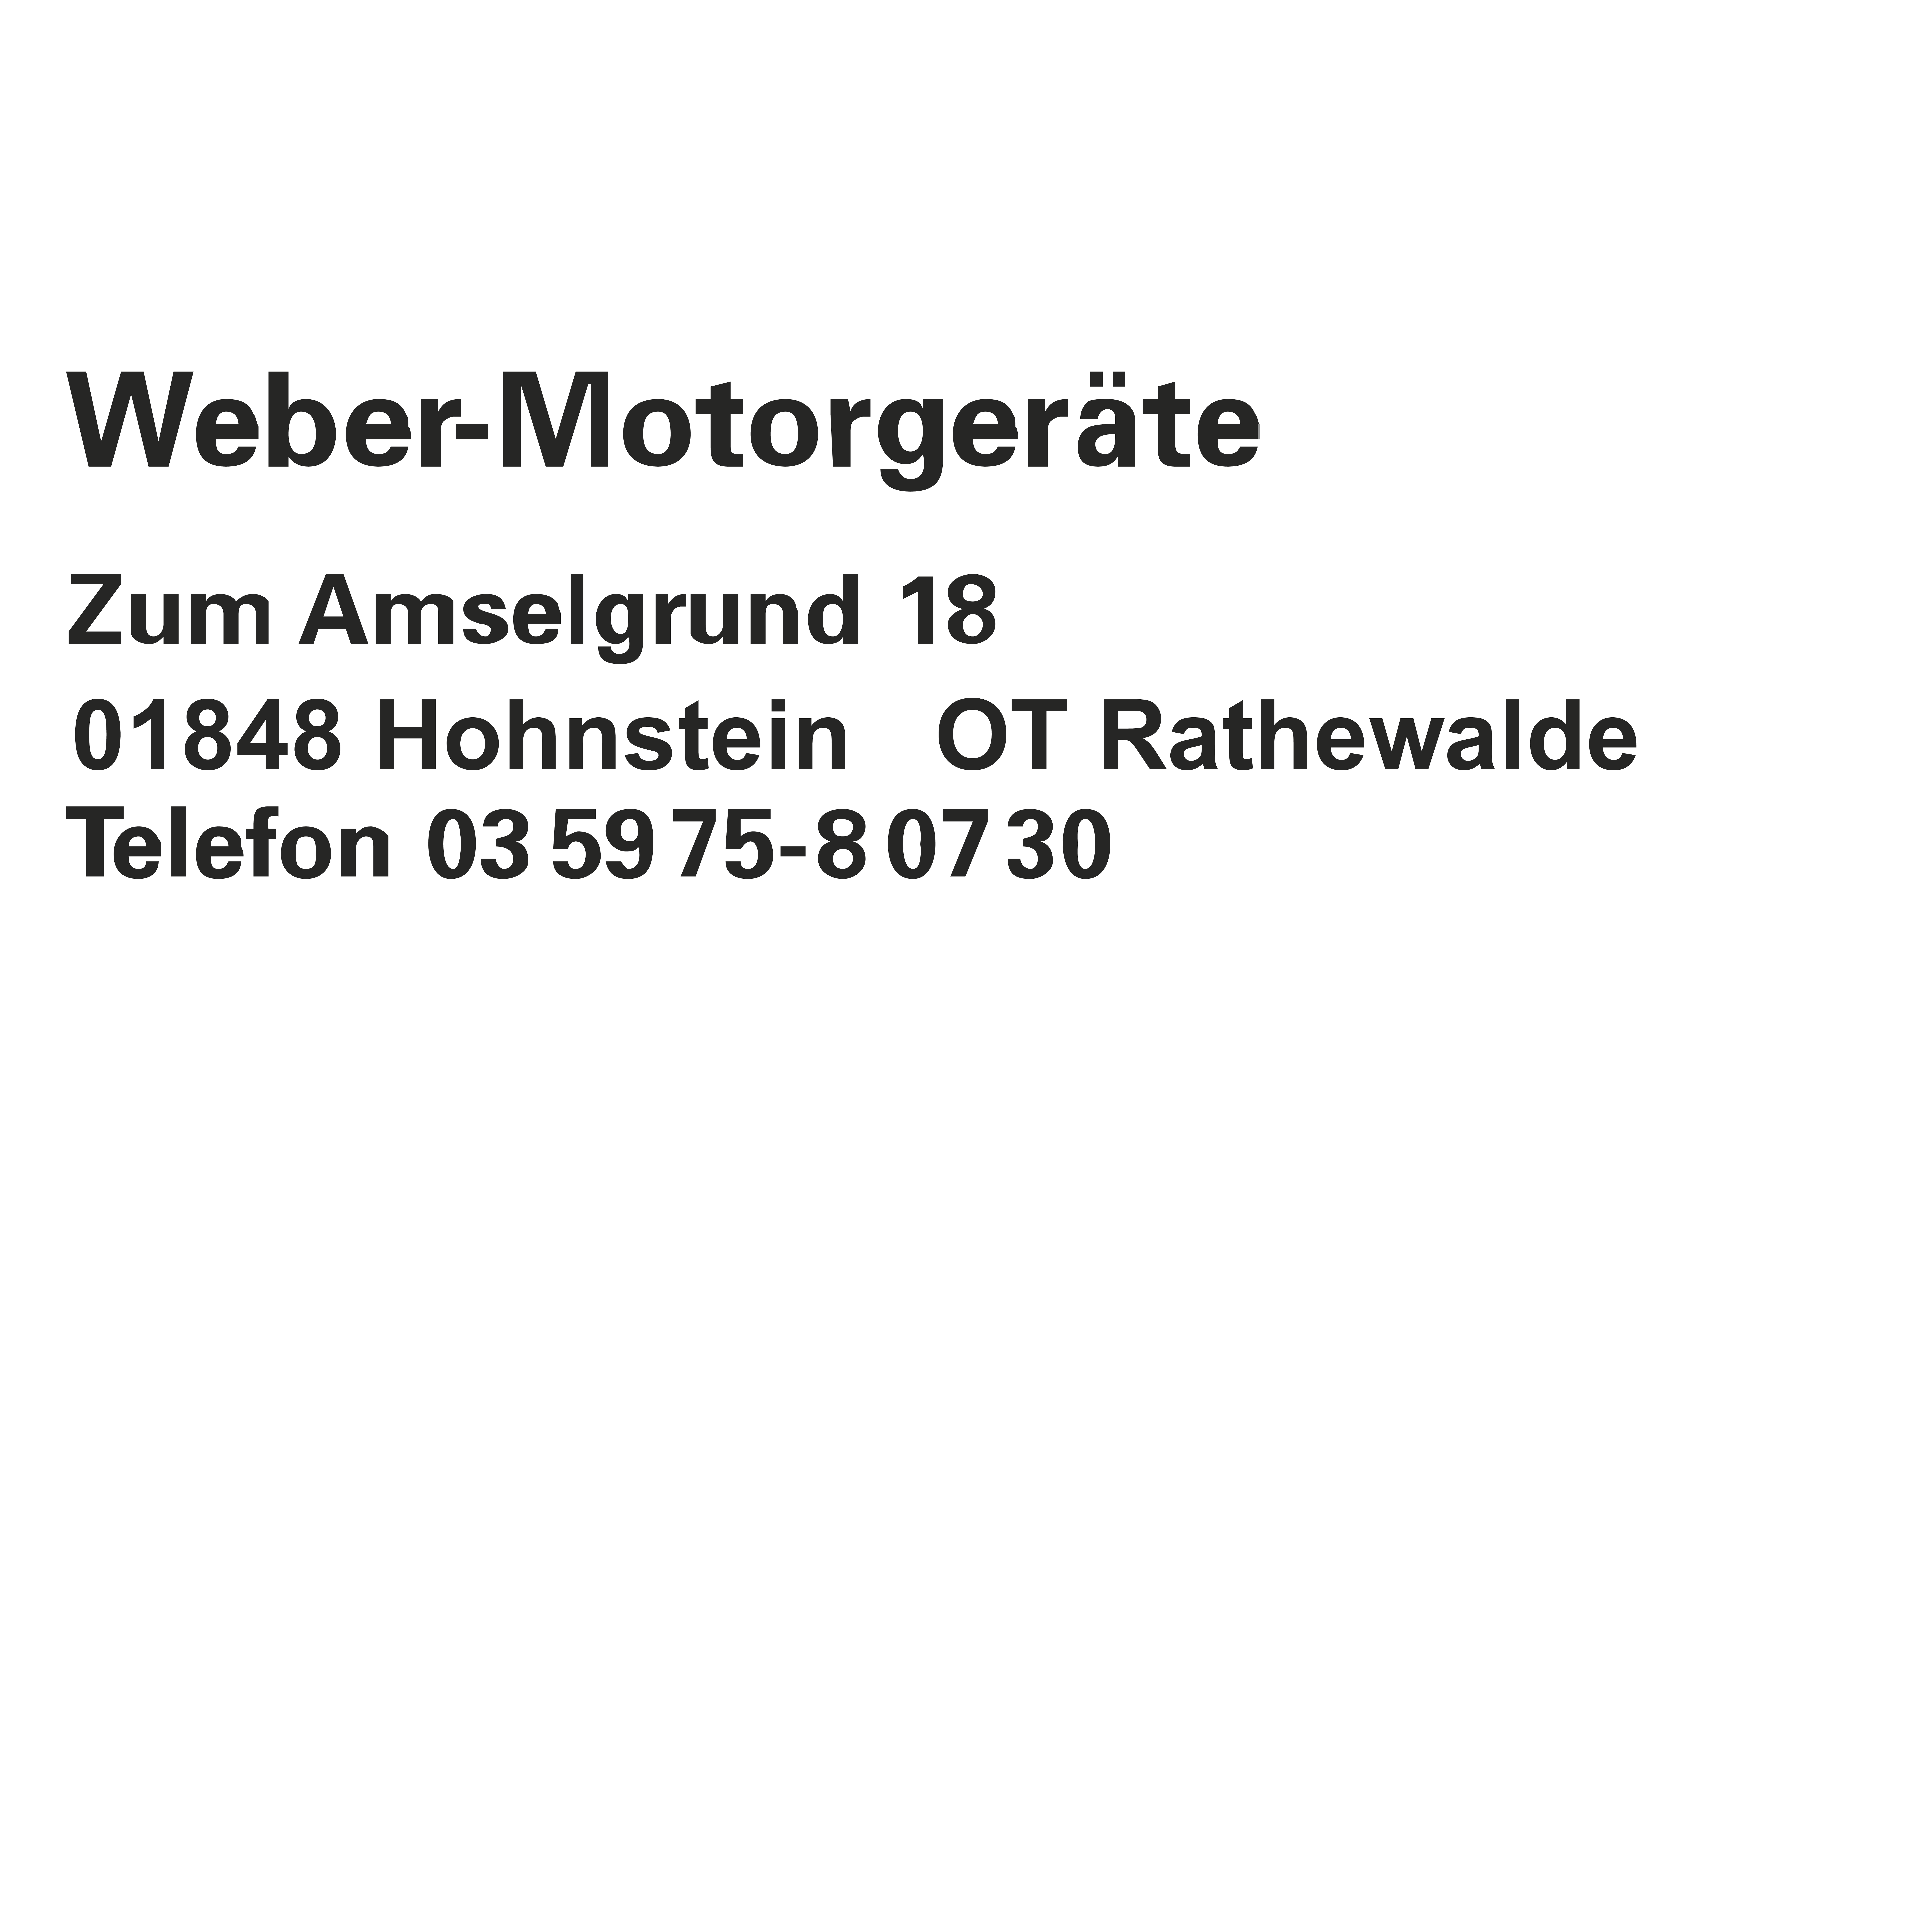 Weber-Motorgeräte  